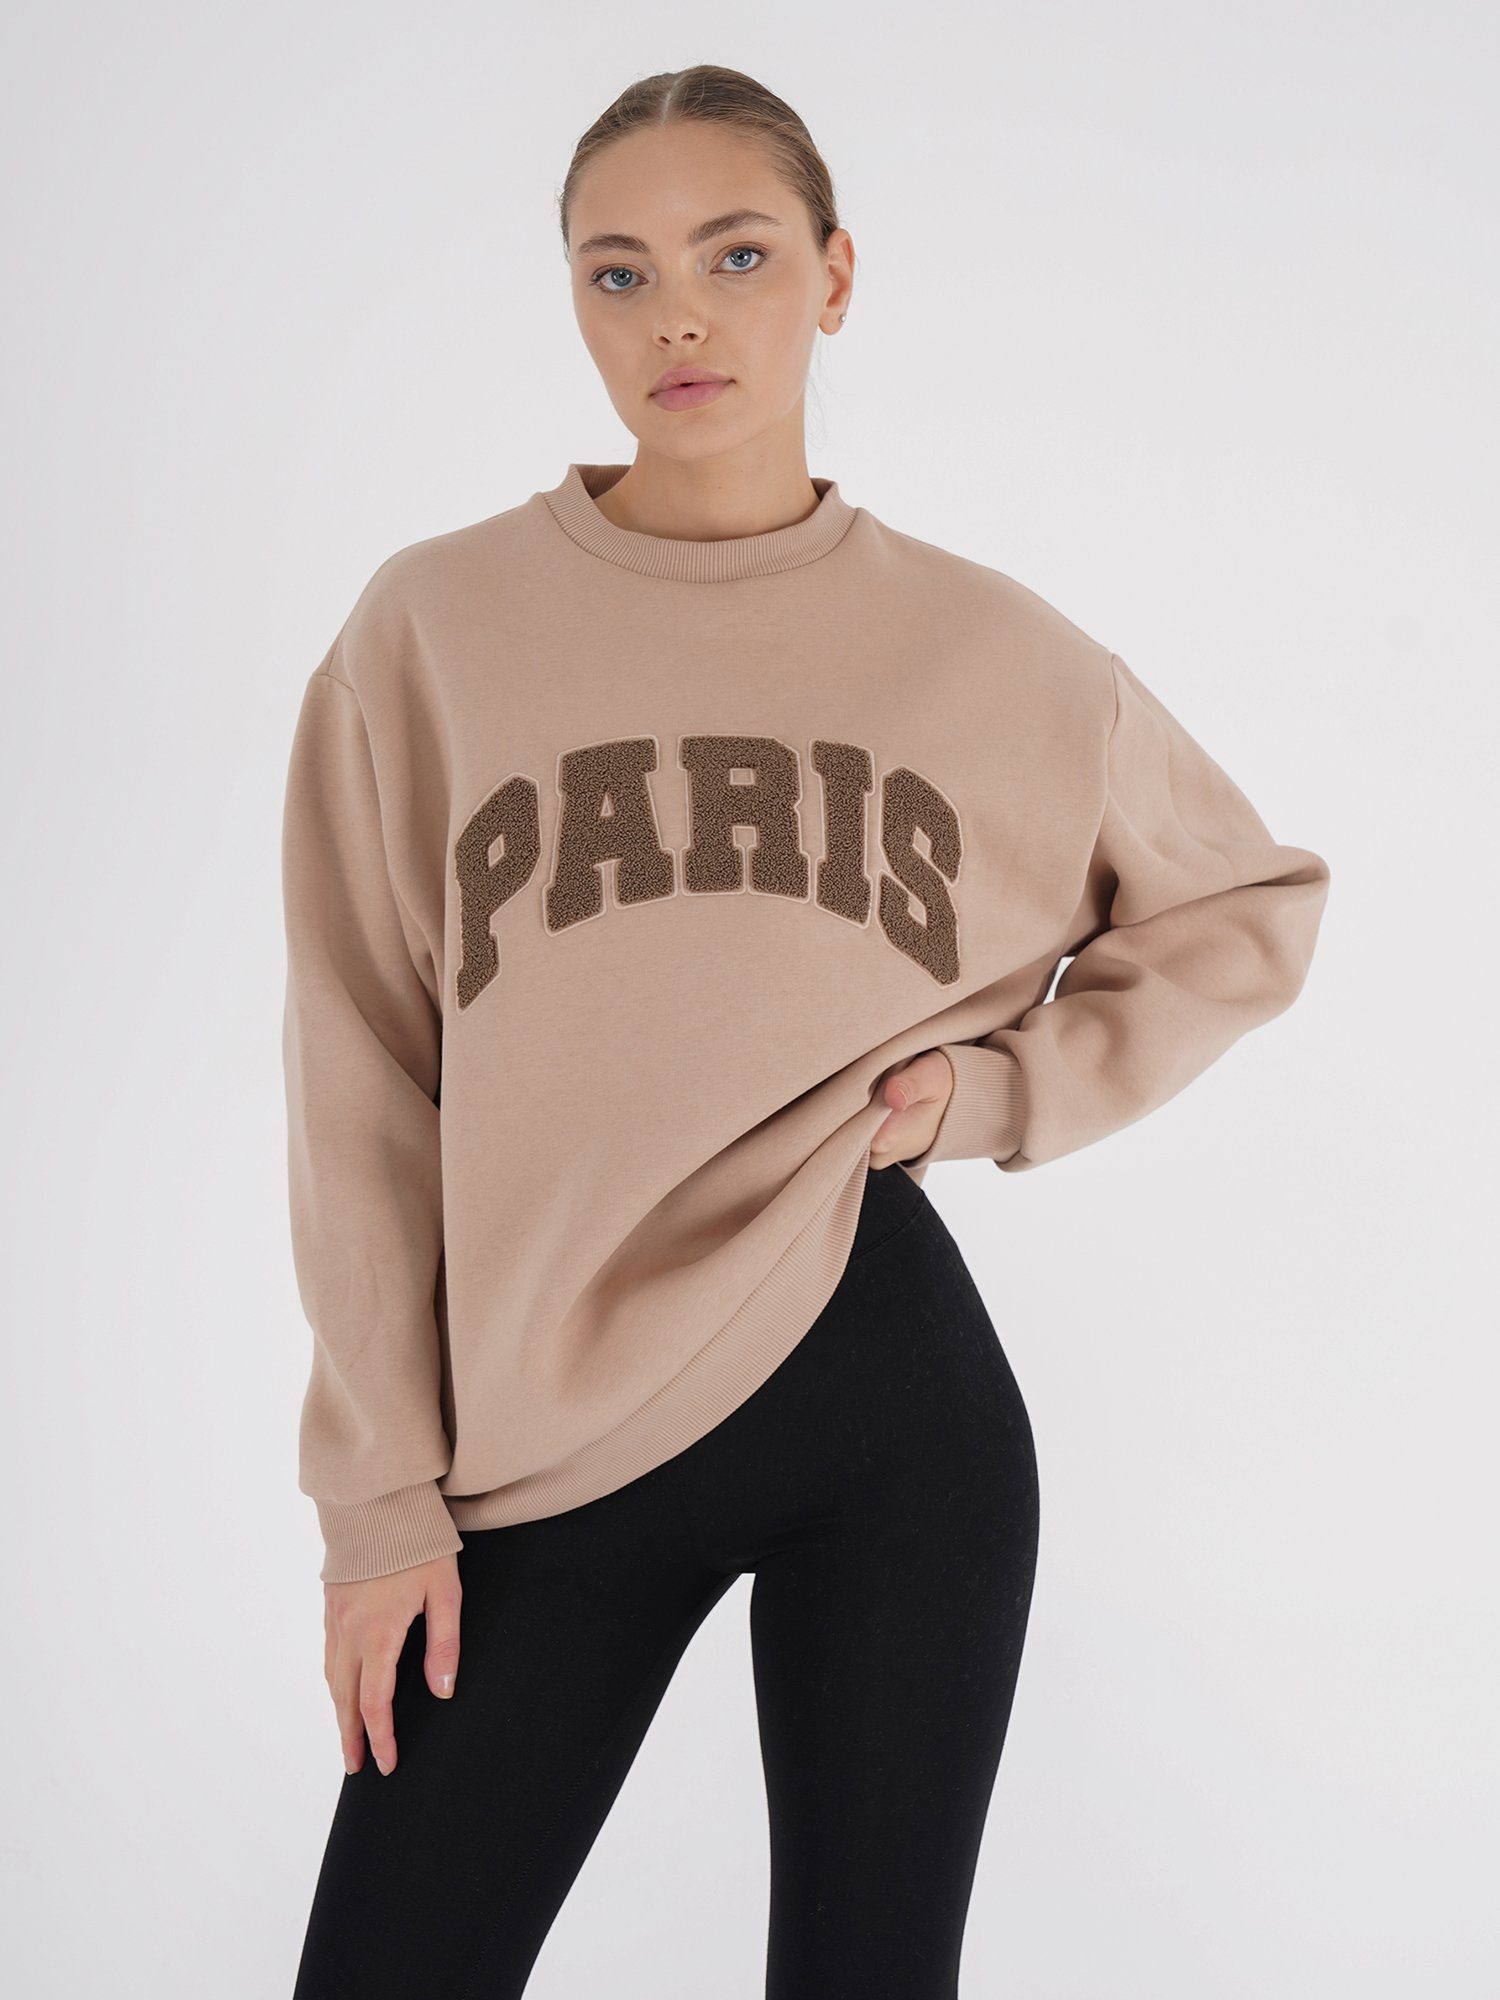 Embroidery Sweater Oversize Freshlions Paris Sweater beige Freshlions